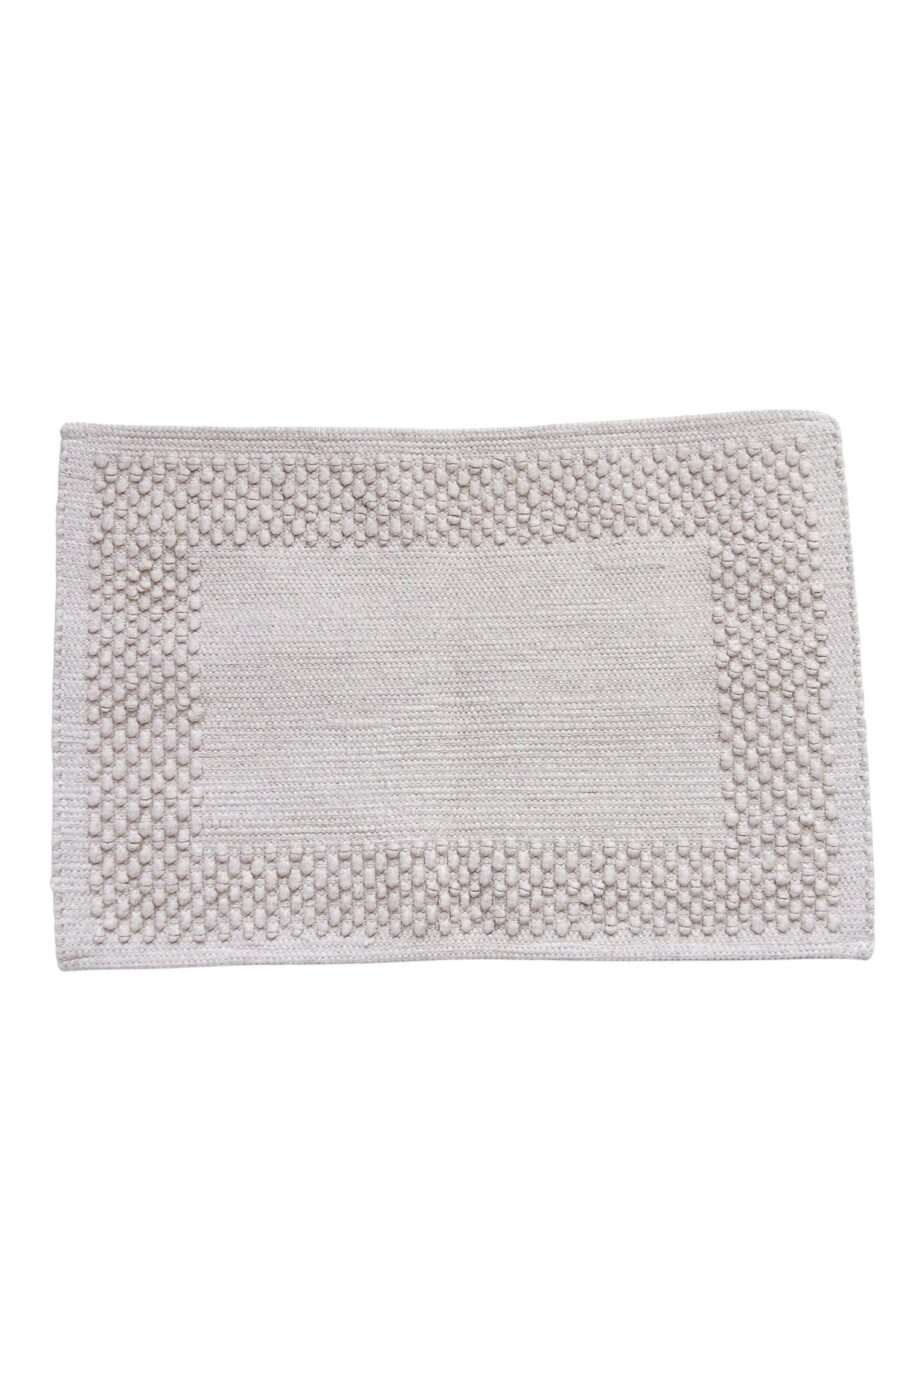 frame ecru woven cotton placemat small